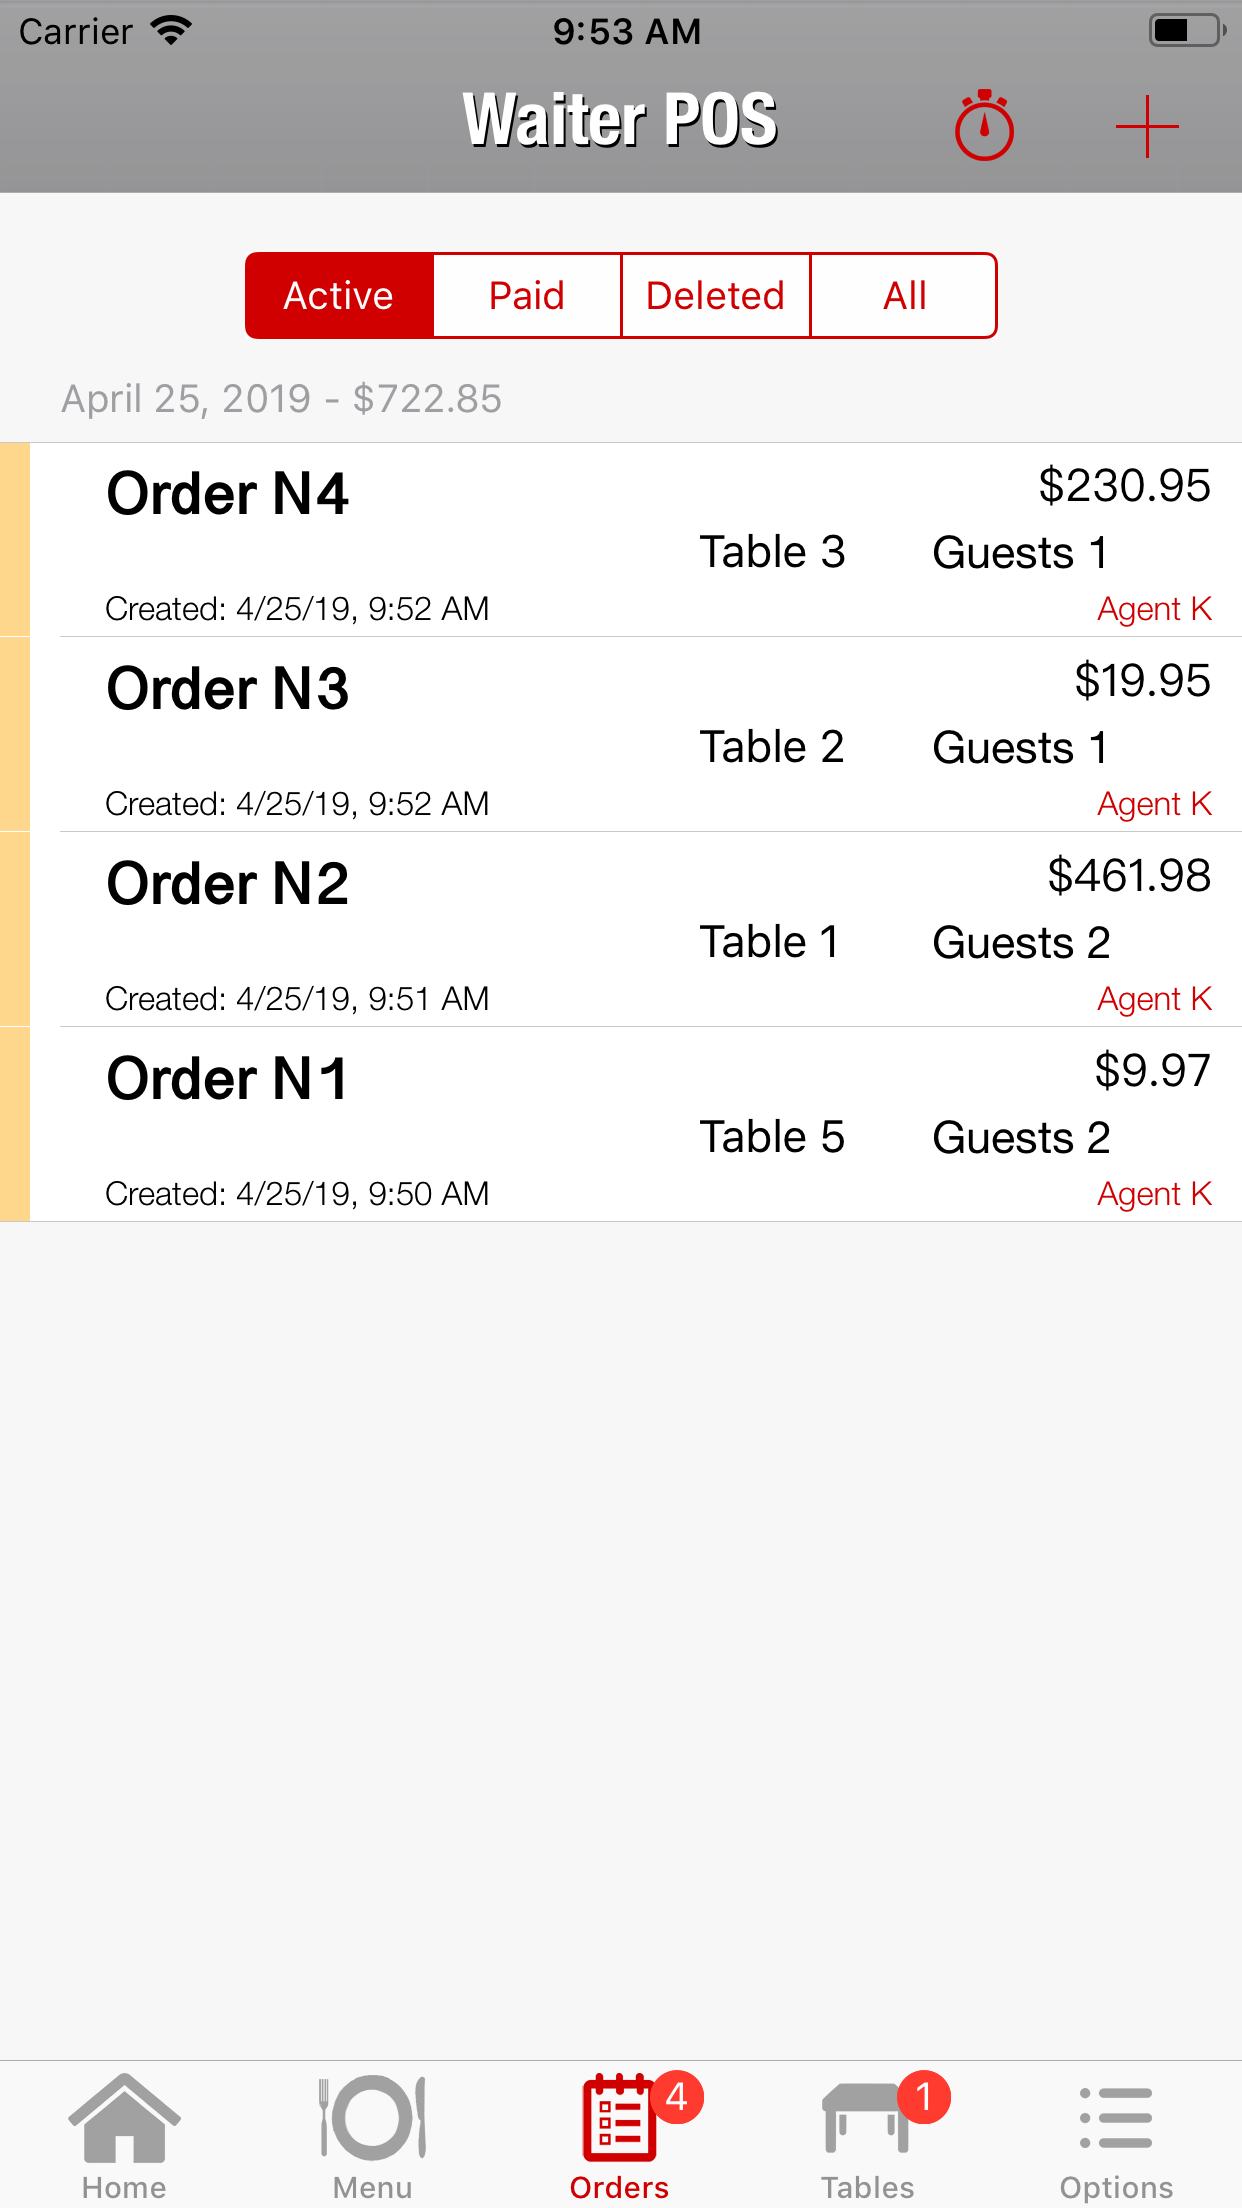 Restaurant POS system, Waiter POS, orders list